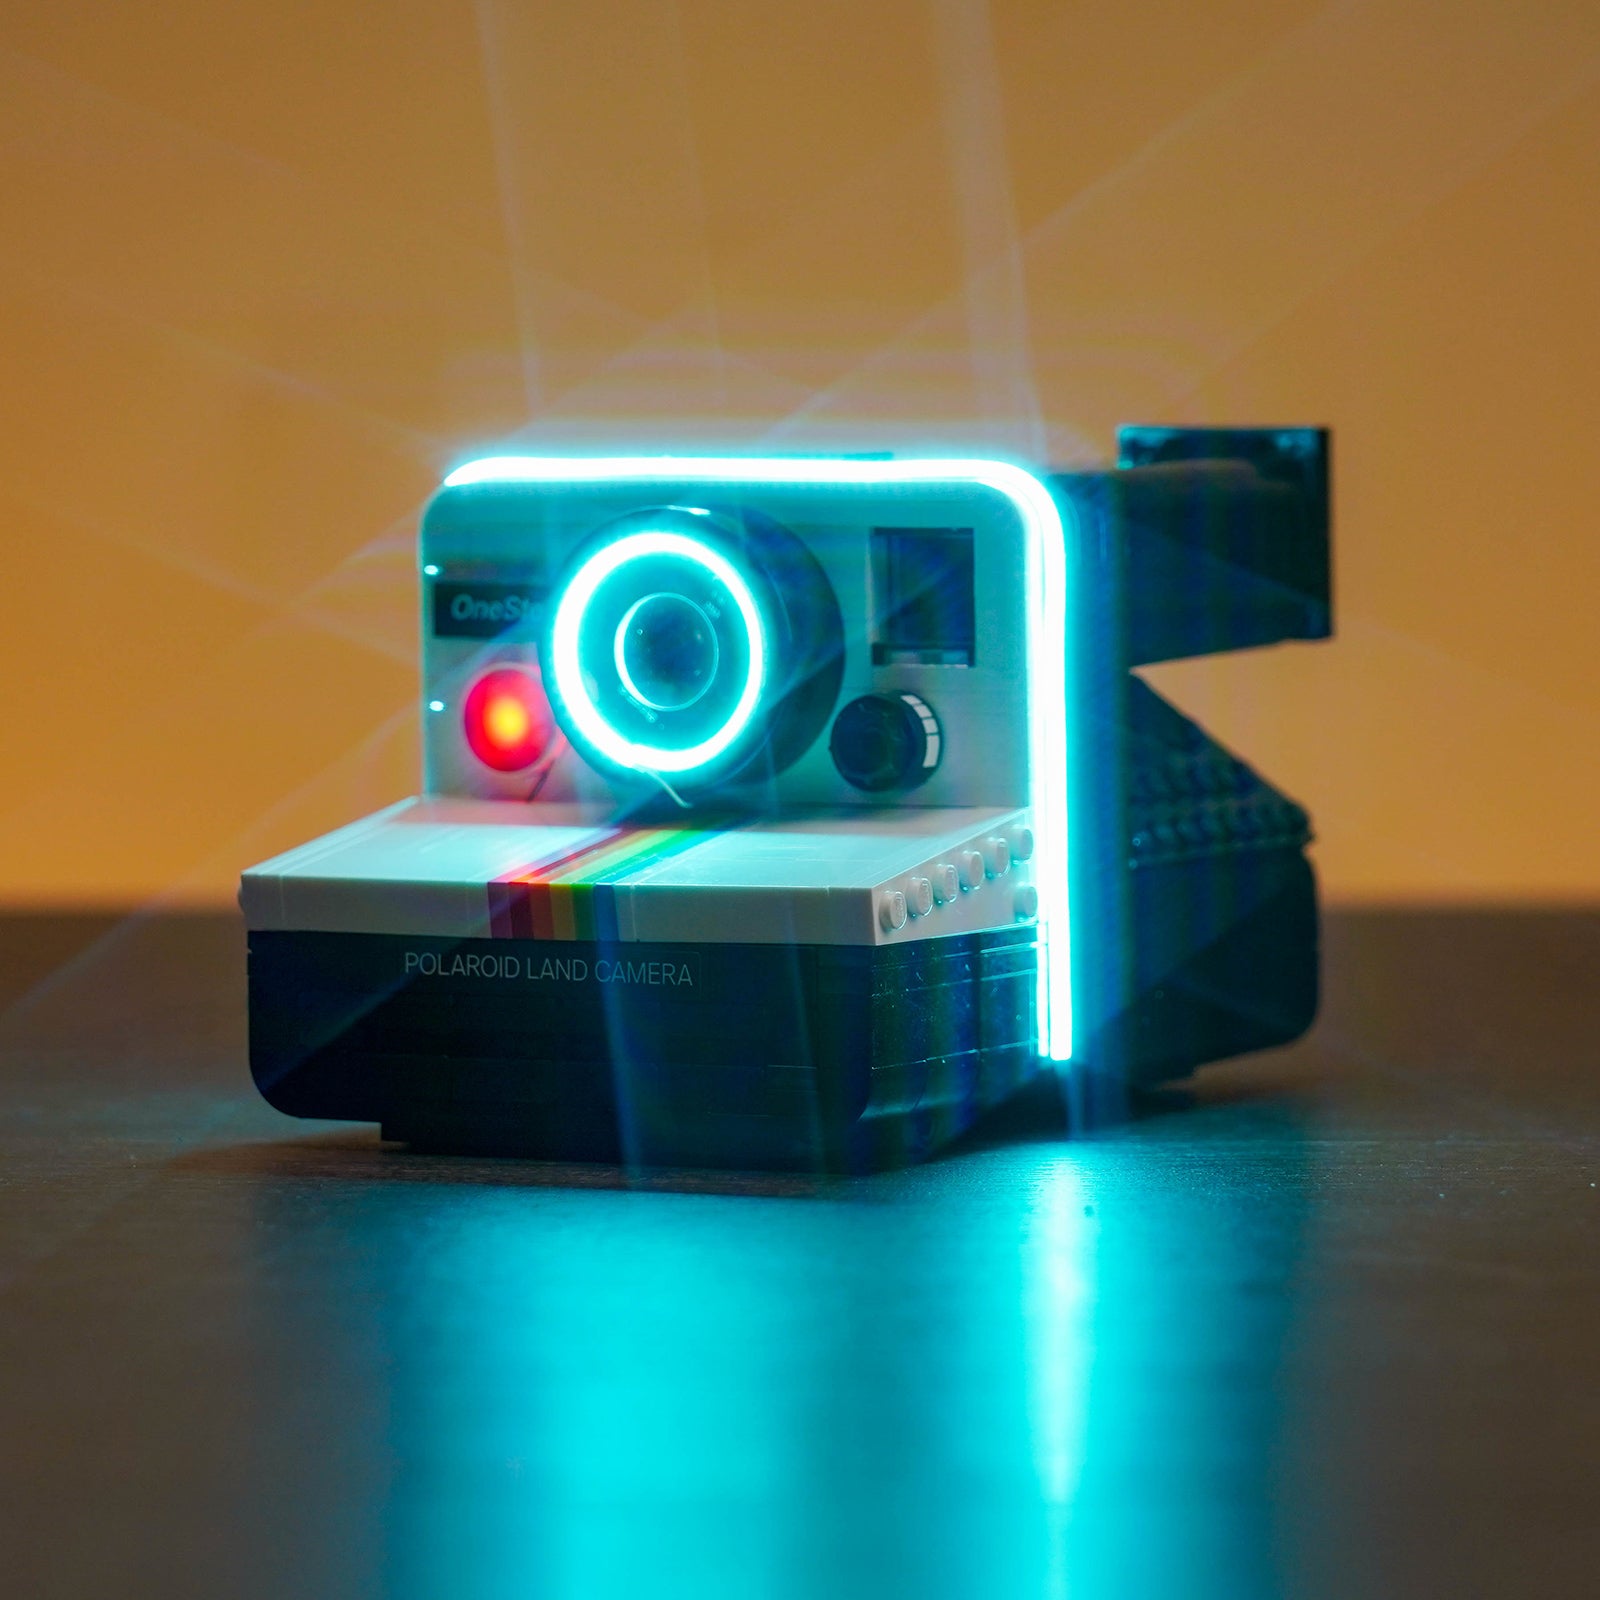 Kit d'éclairage BrickBling pour appareil photo LEGO Ideas Polaroid OneStep SX-70 21345 version 2